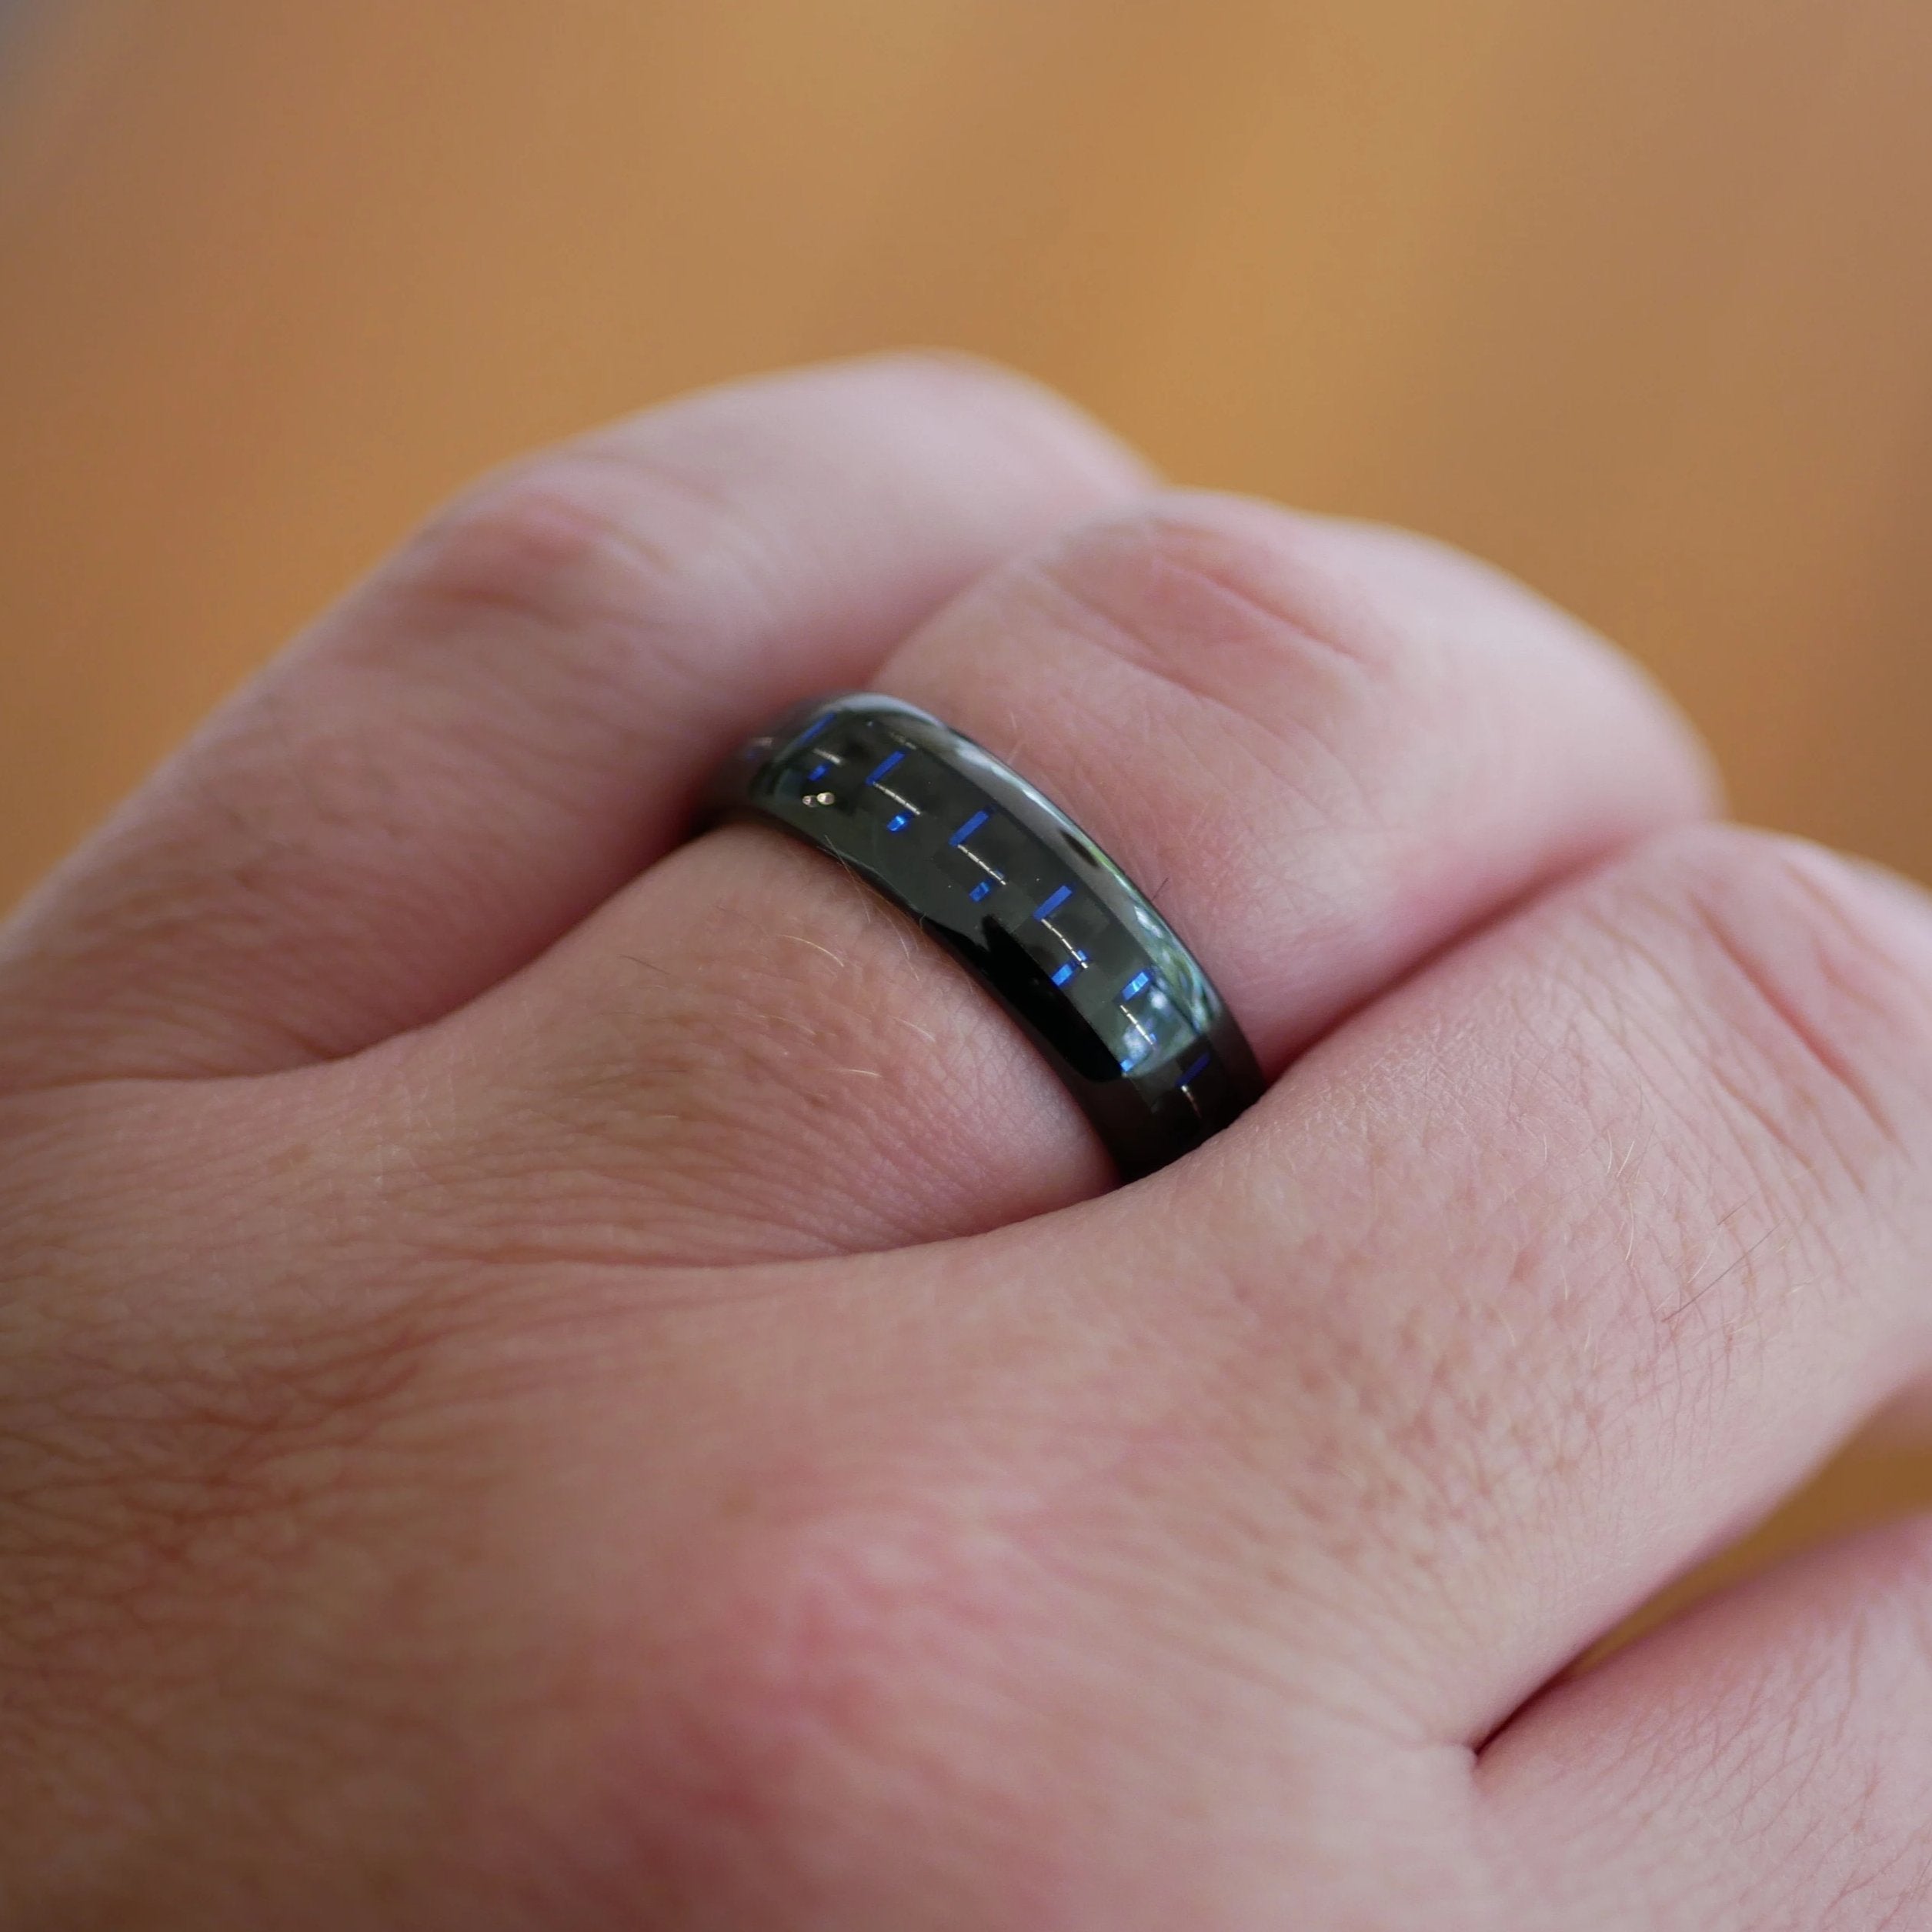 Men's Black Tungsten Ring with Blue Carbon Fiber